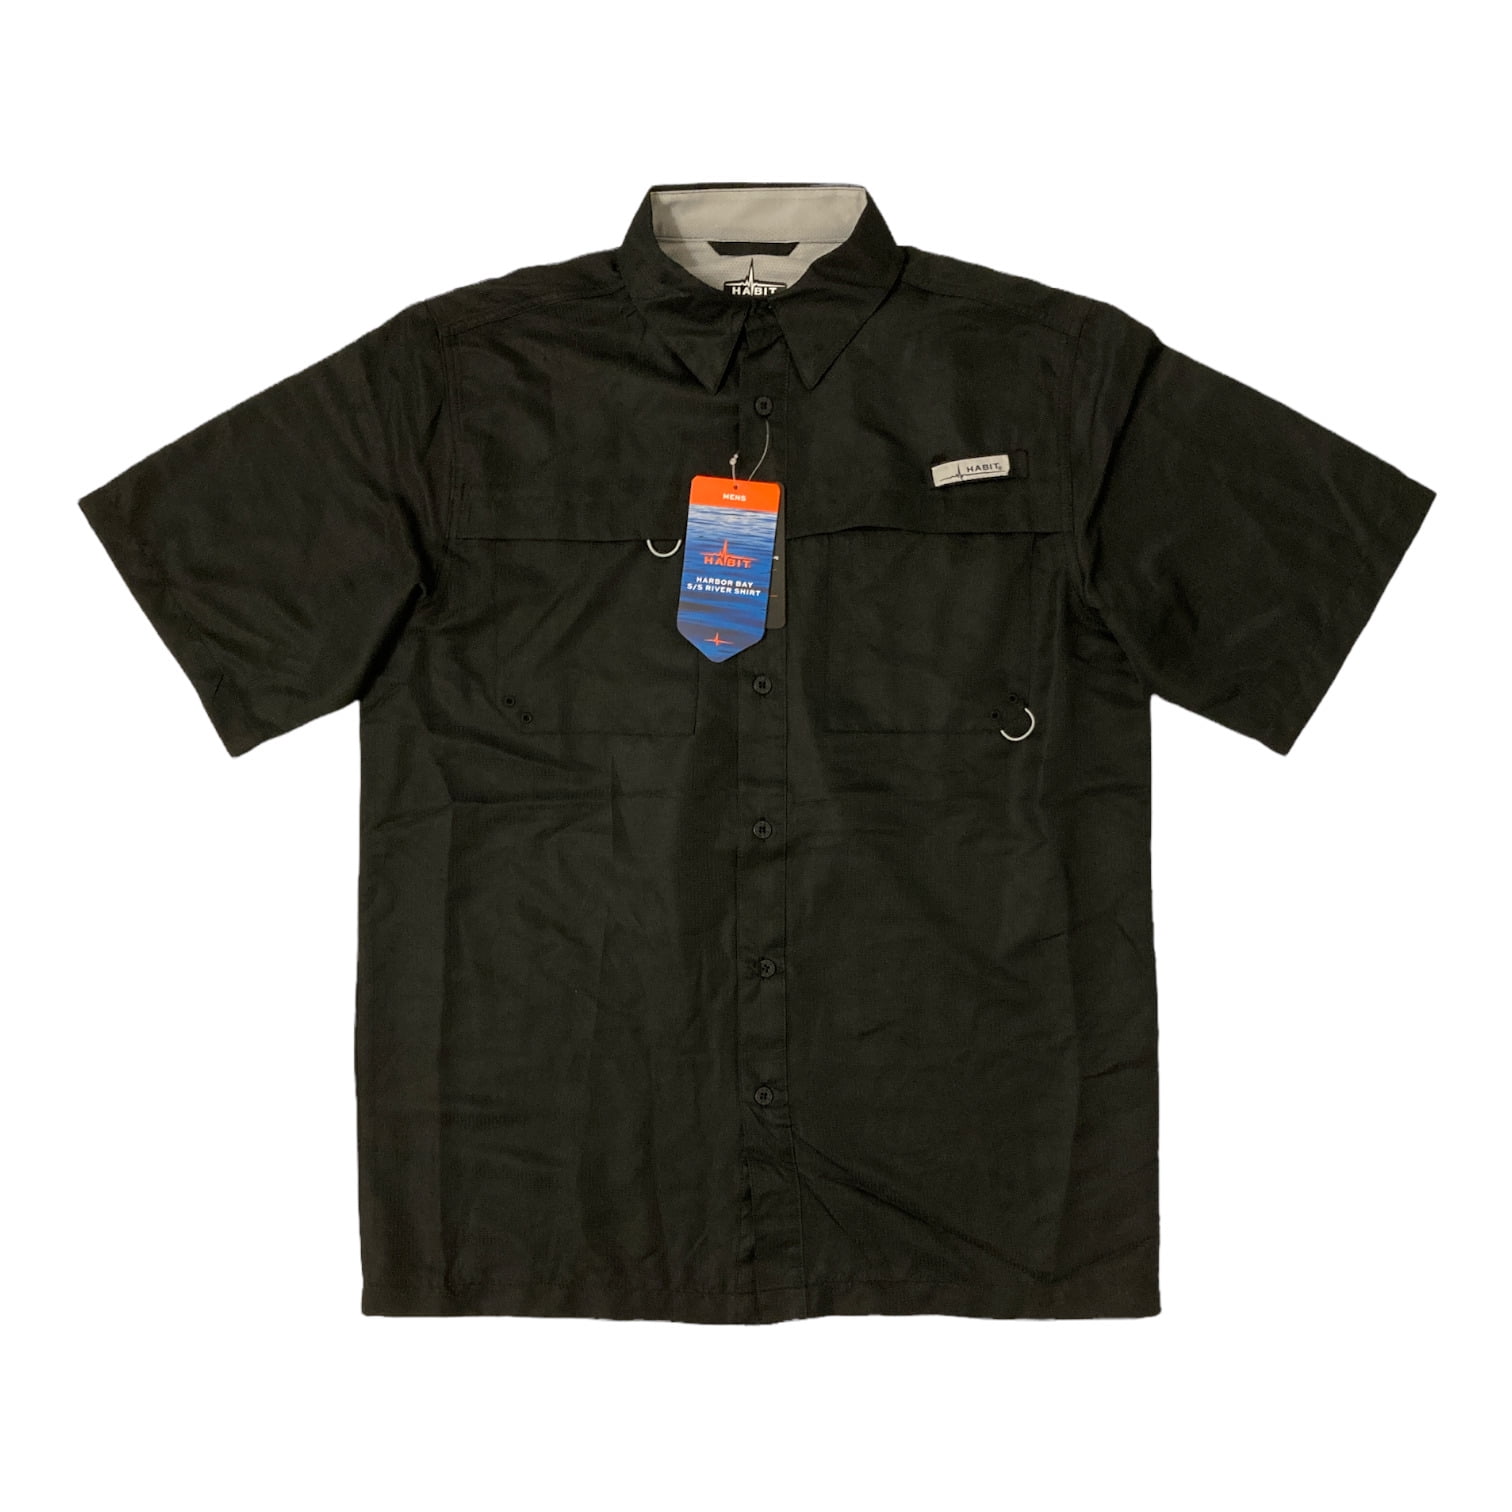 Habit Men's UPF 40+ Harbor Bay Short Sleeve River Shirt (Black, XL)